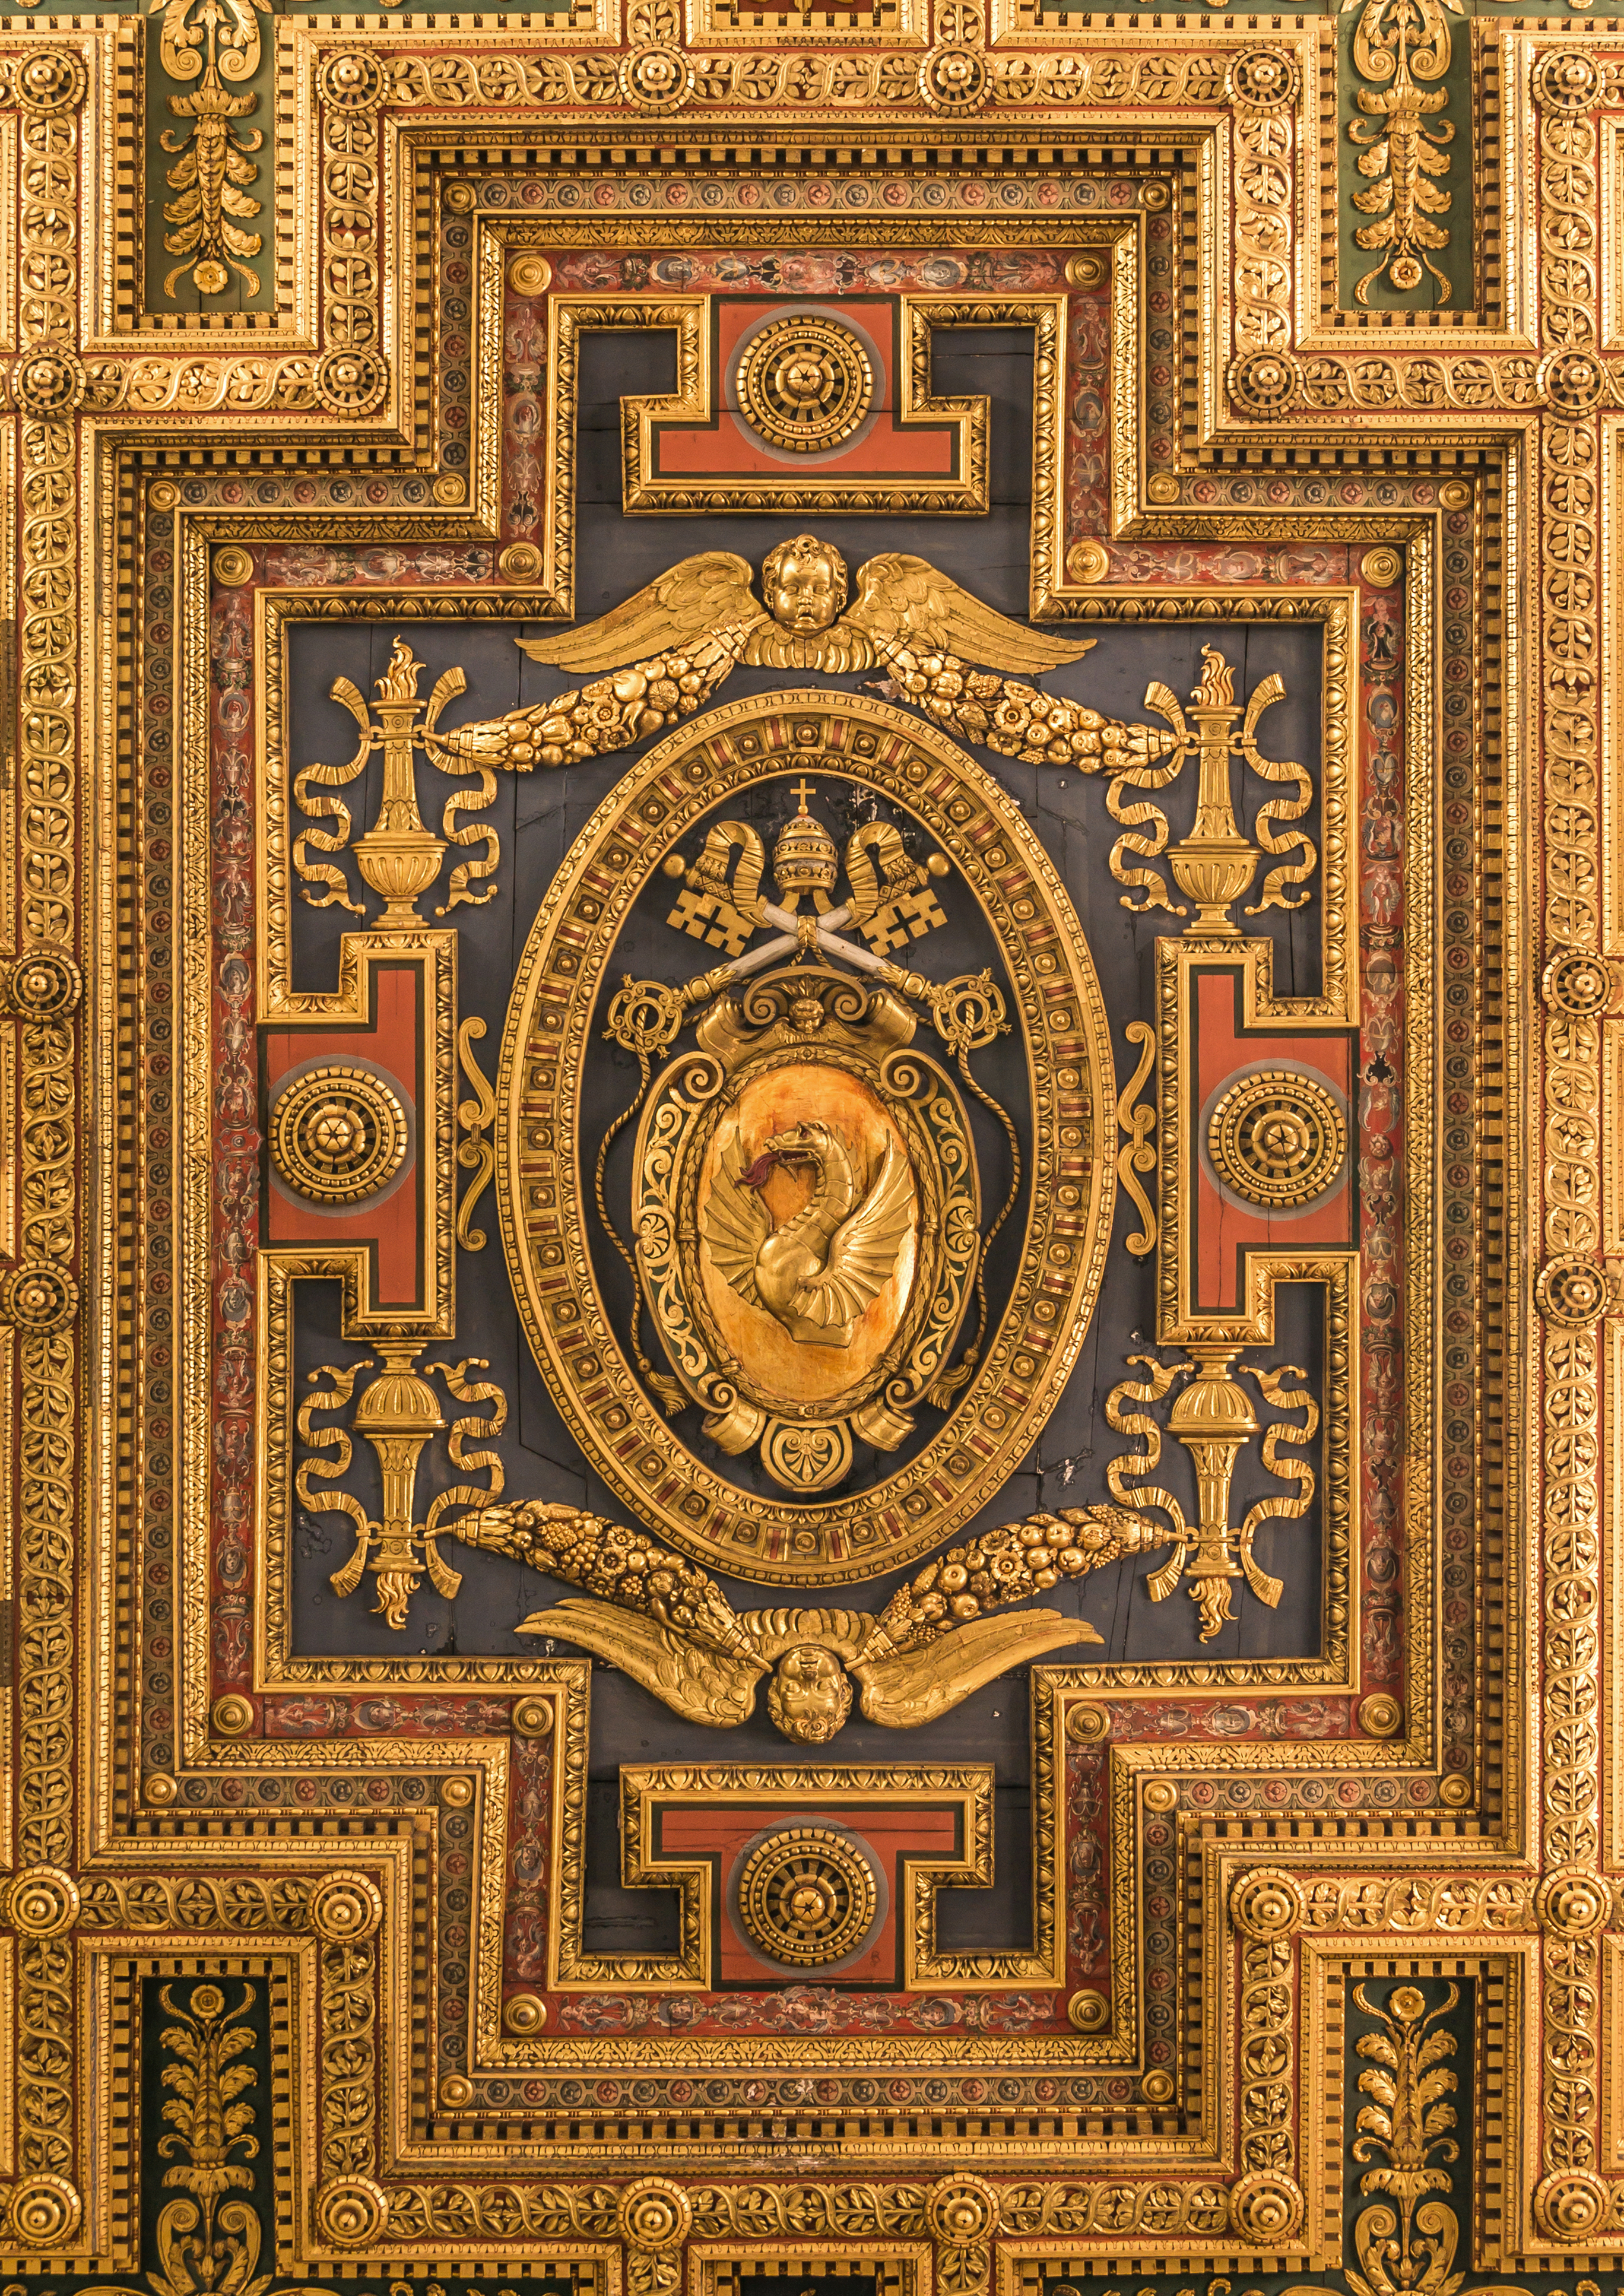 CoA Gregorius XIII ceiling Church Santa Maria in Aracoeli, Rome, Italy